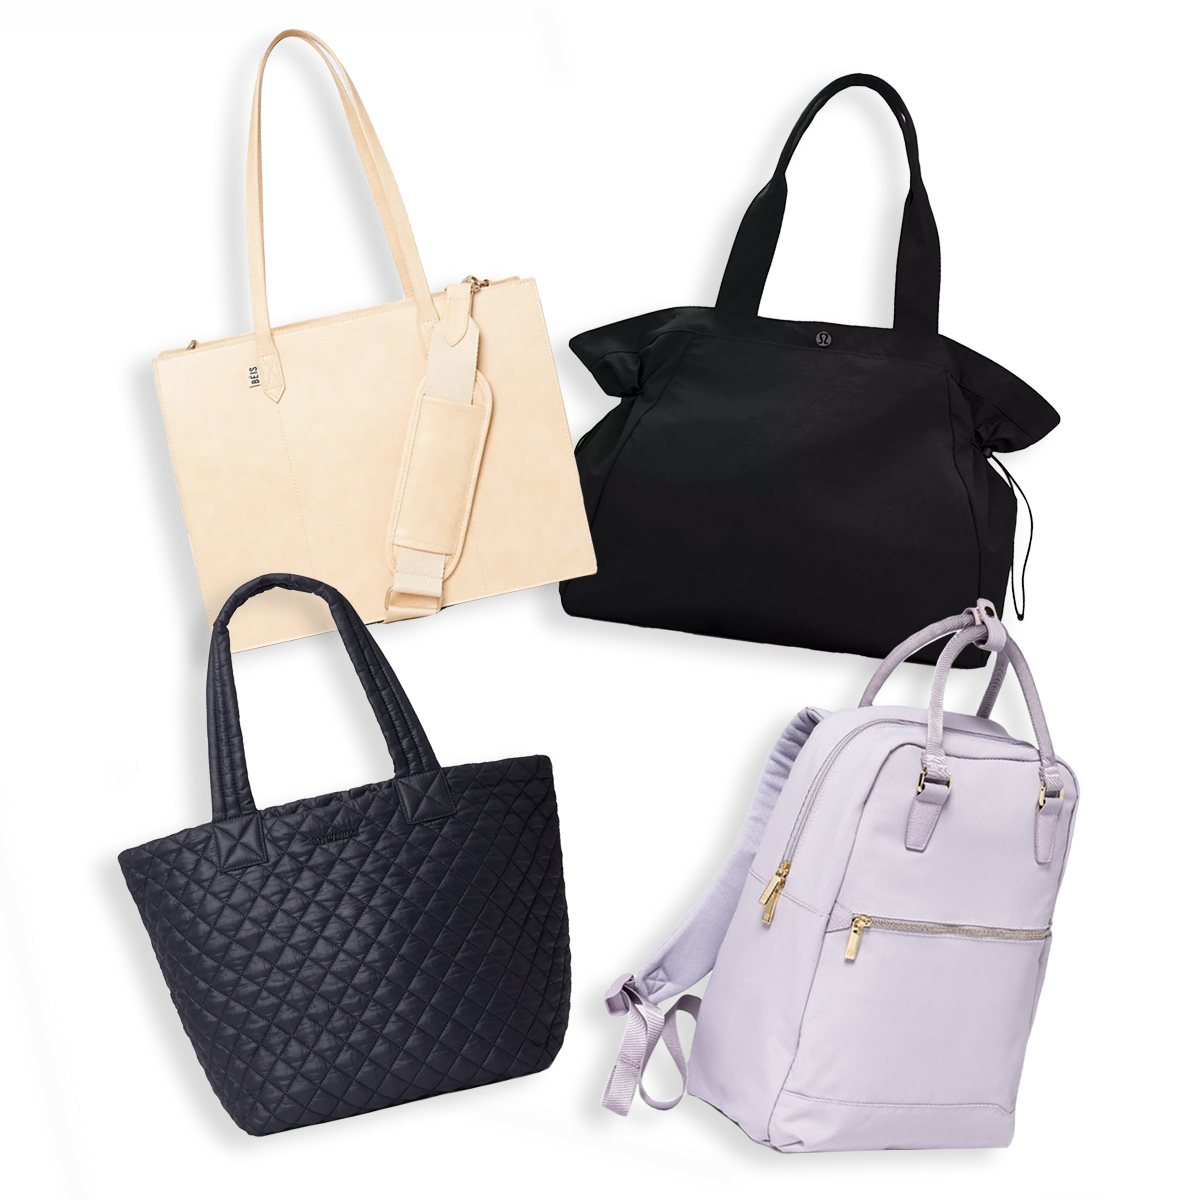 Moms deserve a new back to school bag too… a #luxuryhandbag that